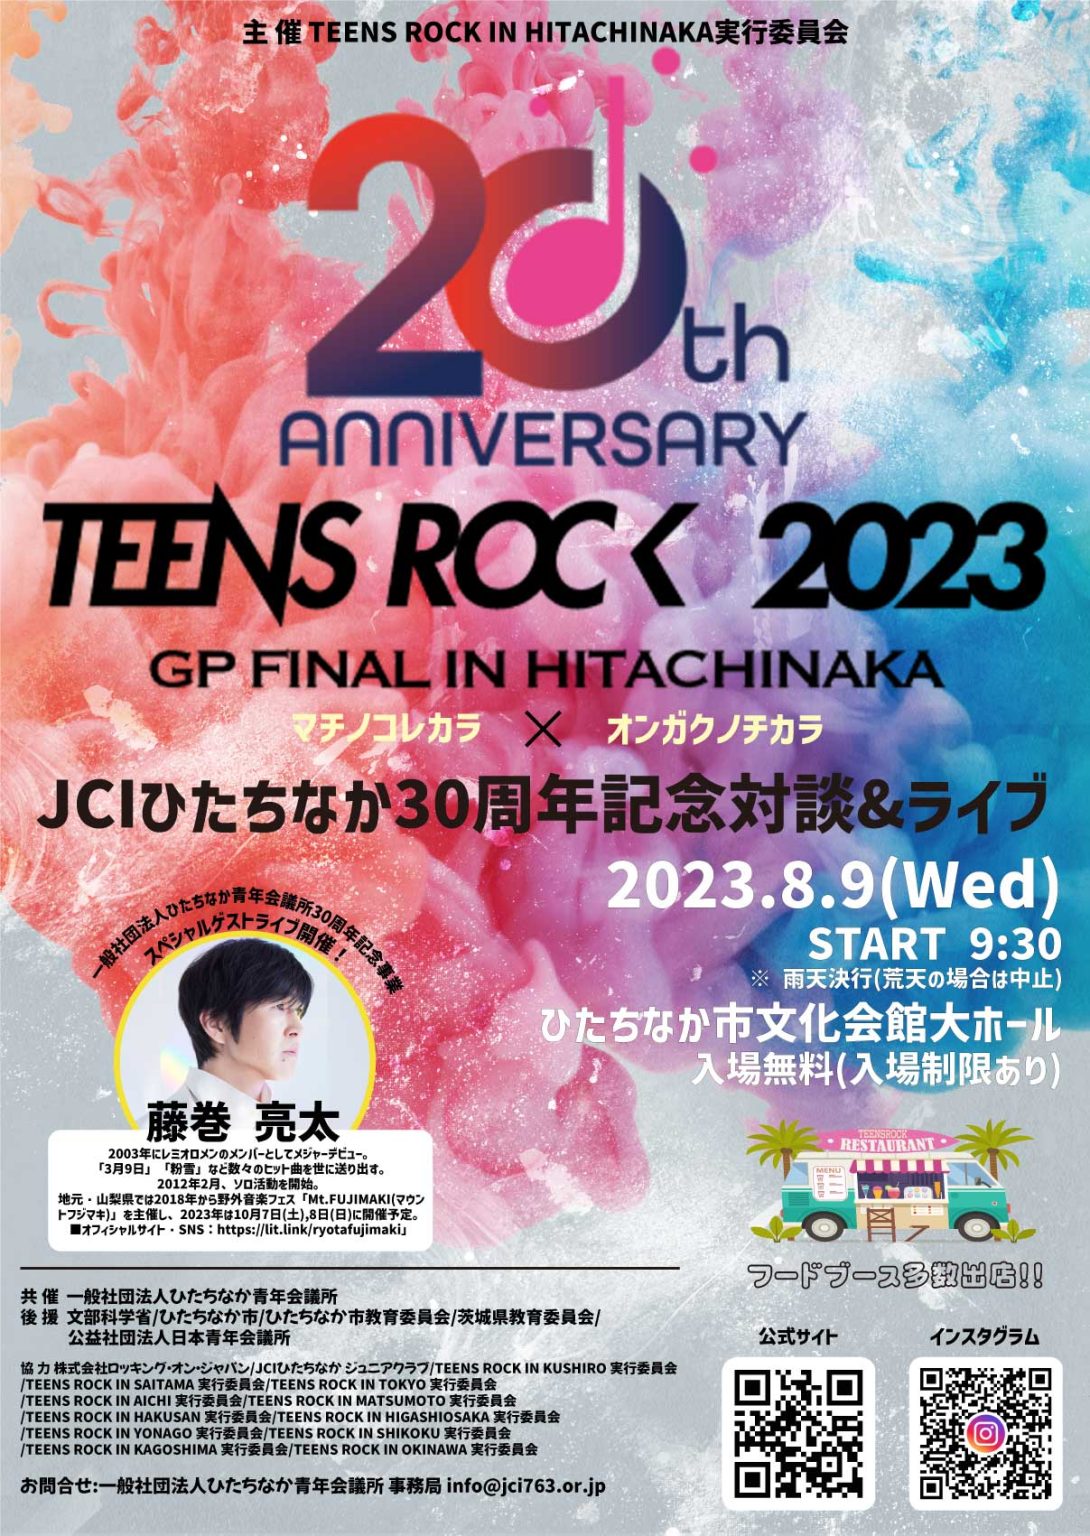 『TEENS ROCK 2023 GP FINAL × JCIひたちなか30周年記念対談&ライブ』開催のお知らせ TEENS ROCK